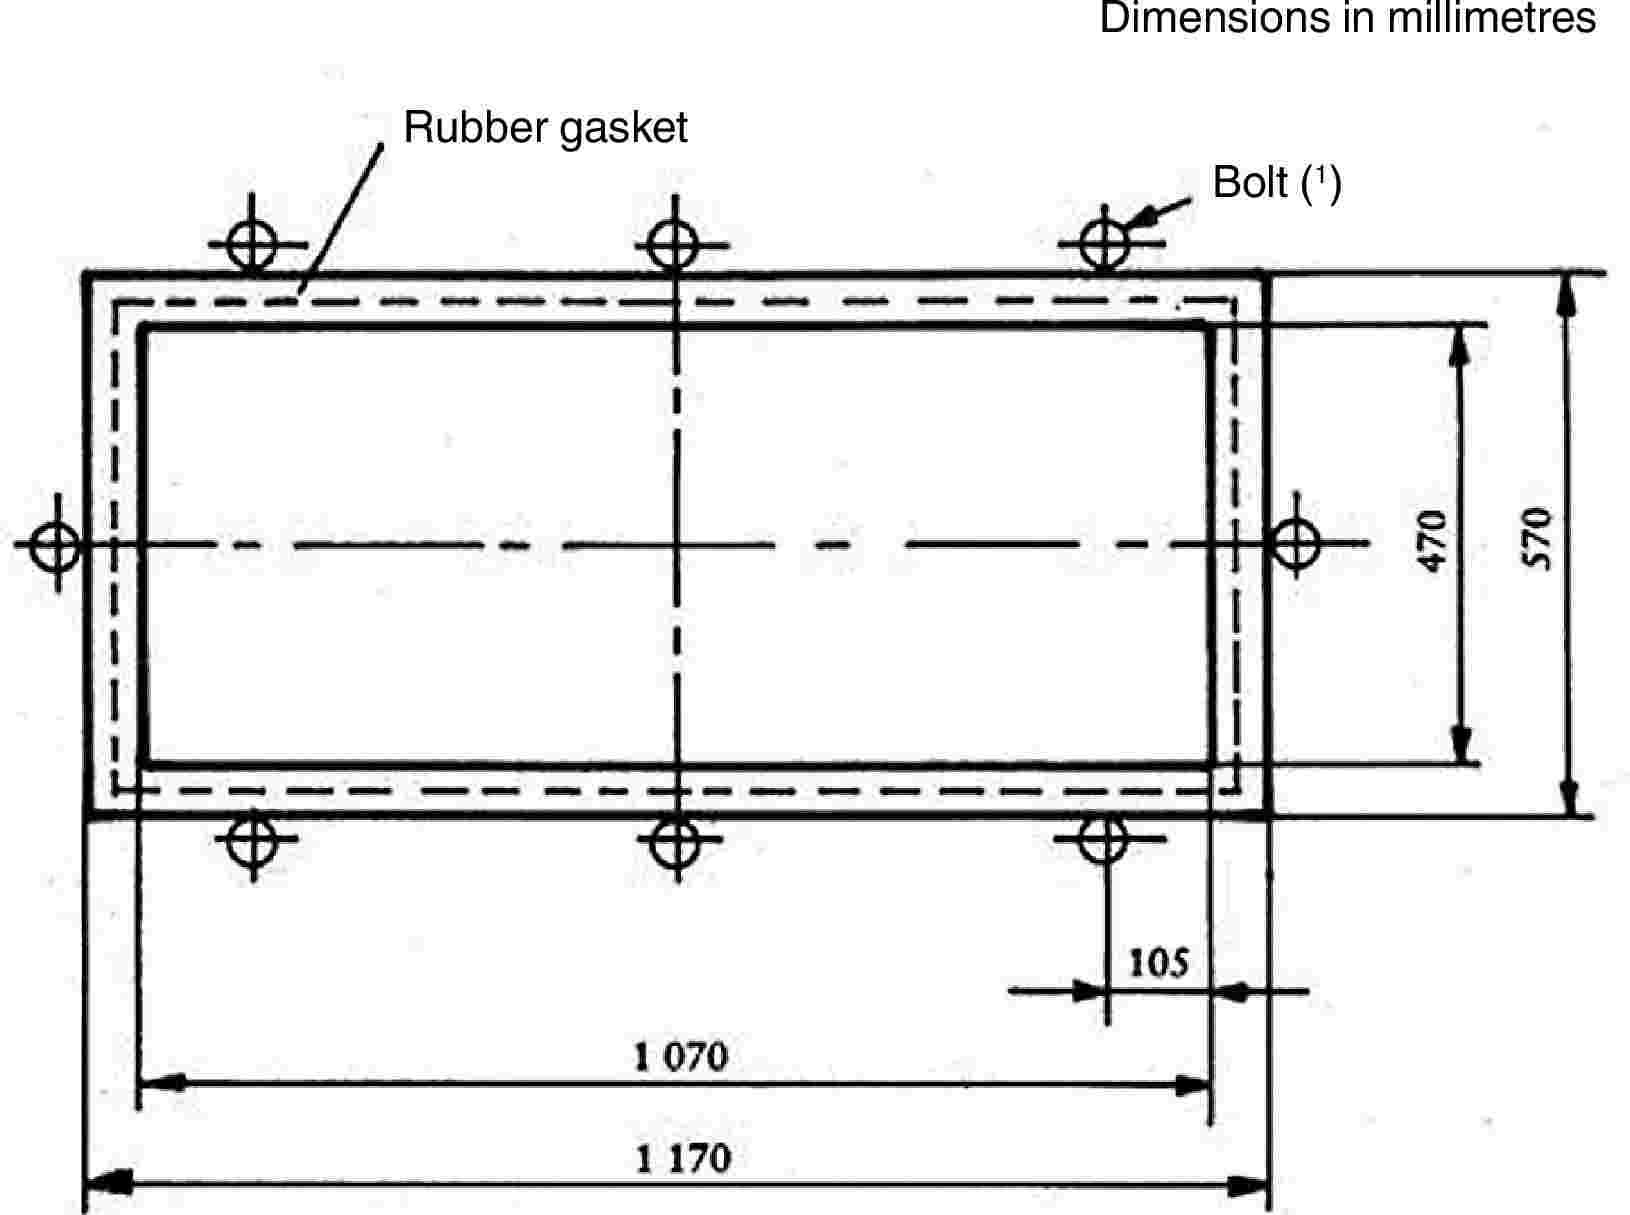 Rubber gasketDimensions in millimetresBolt (1)